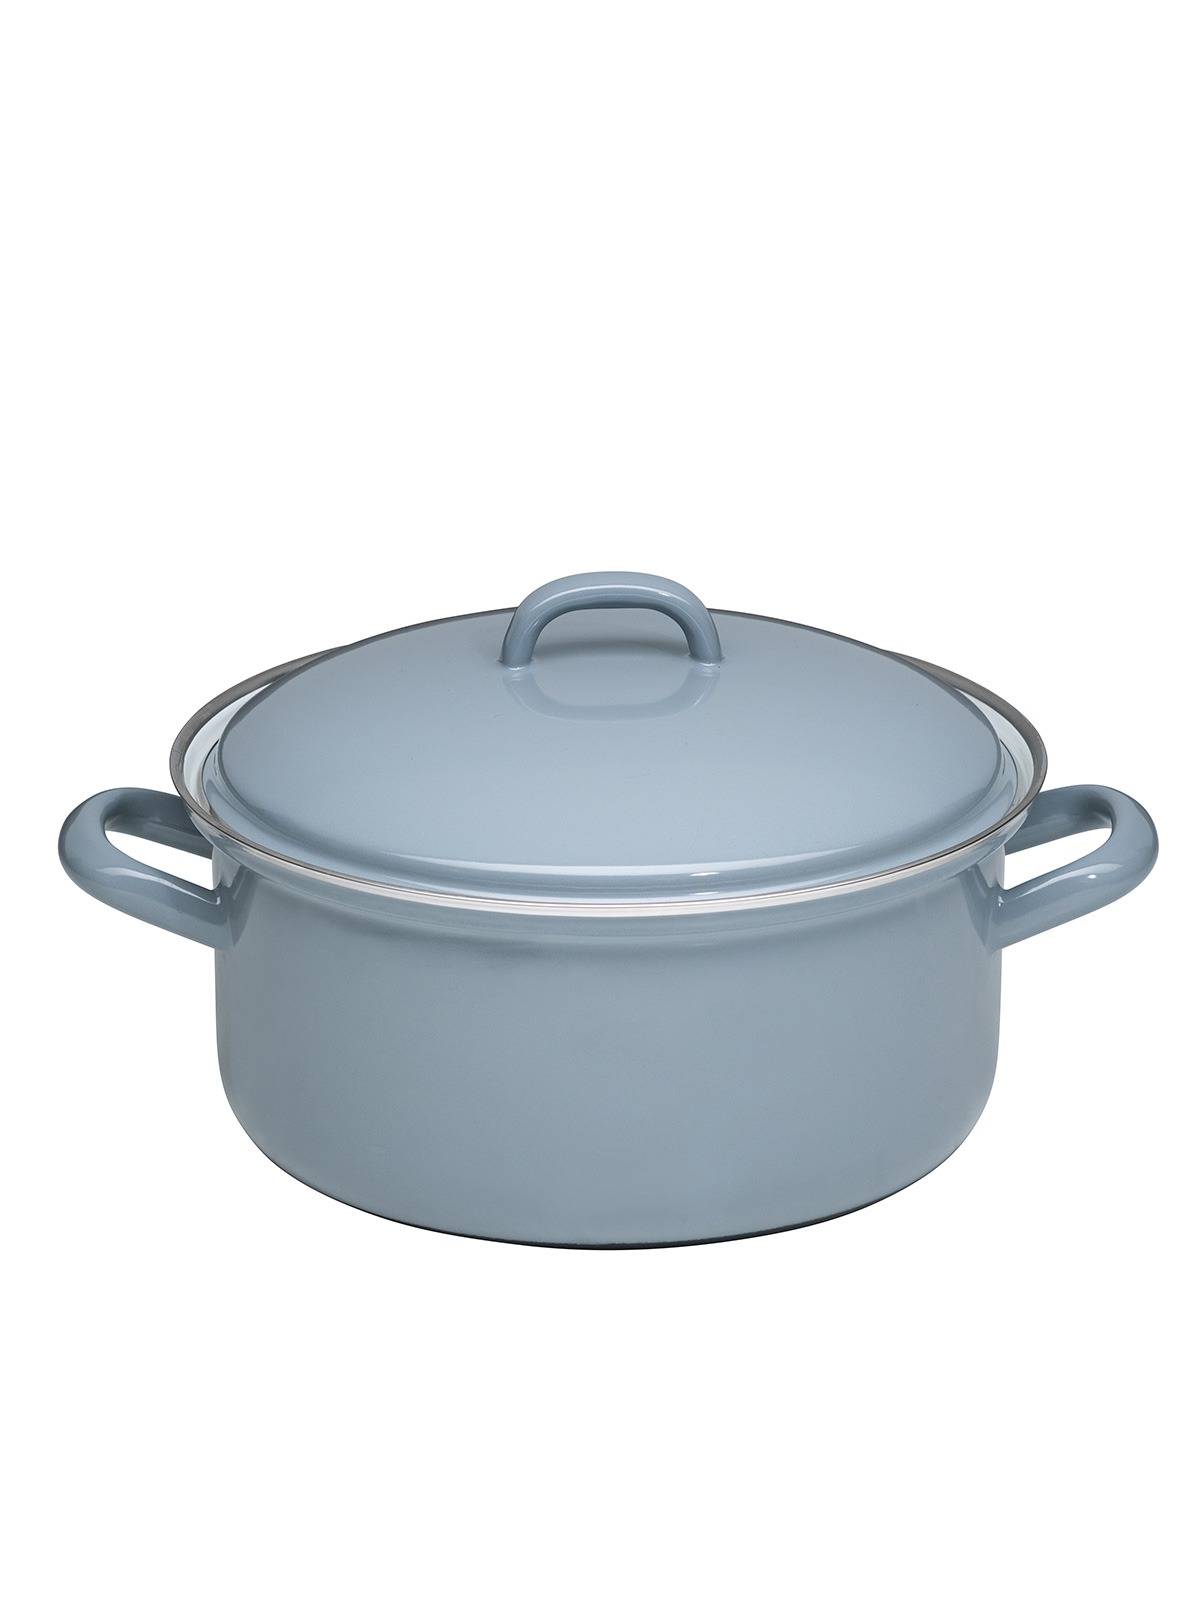 casserole grey 3l (0131-65)